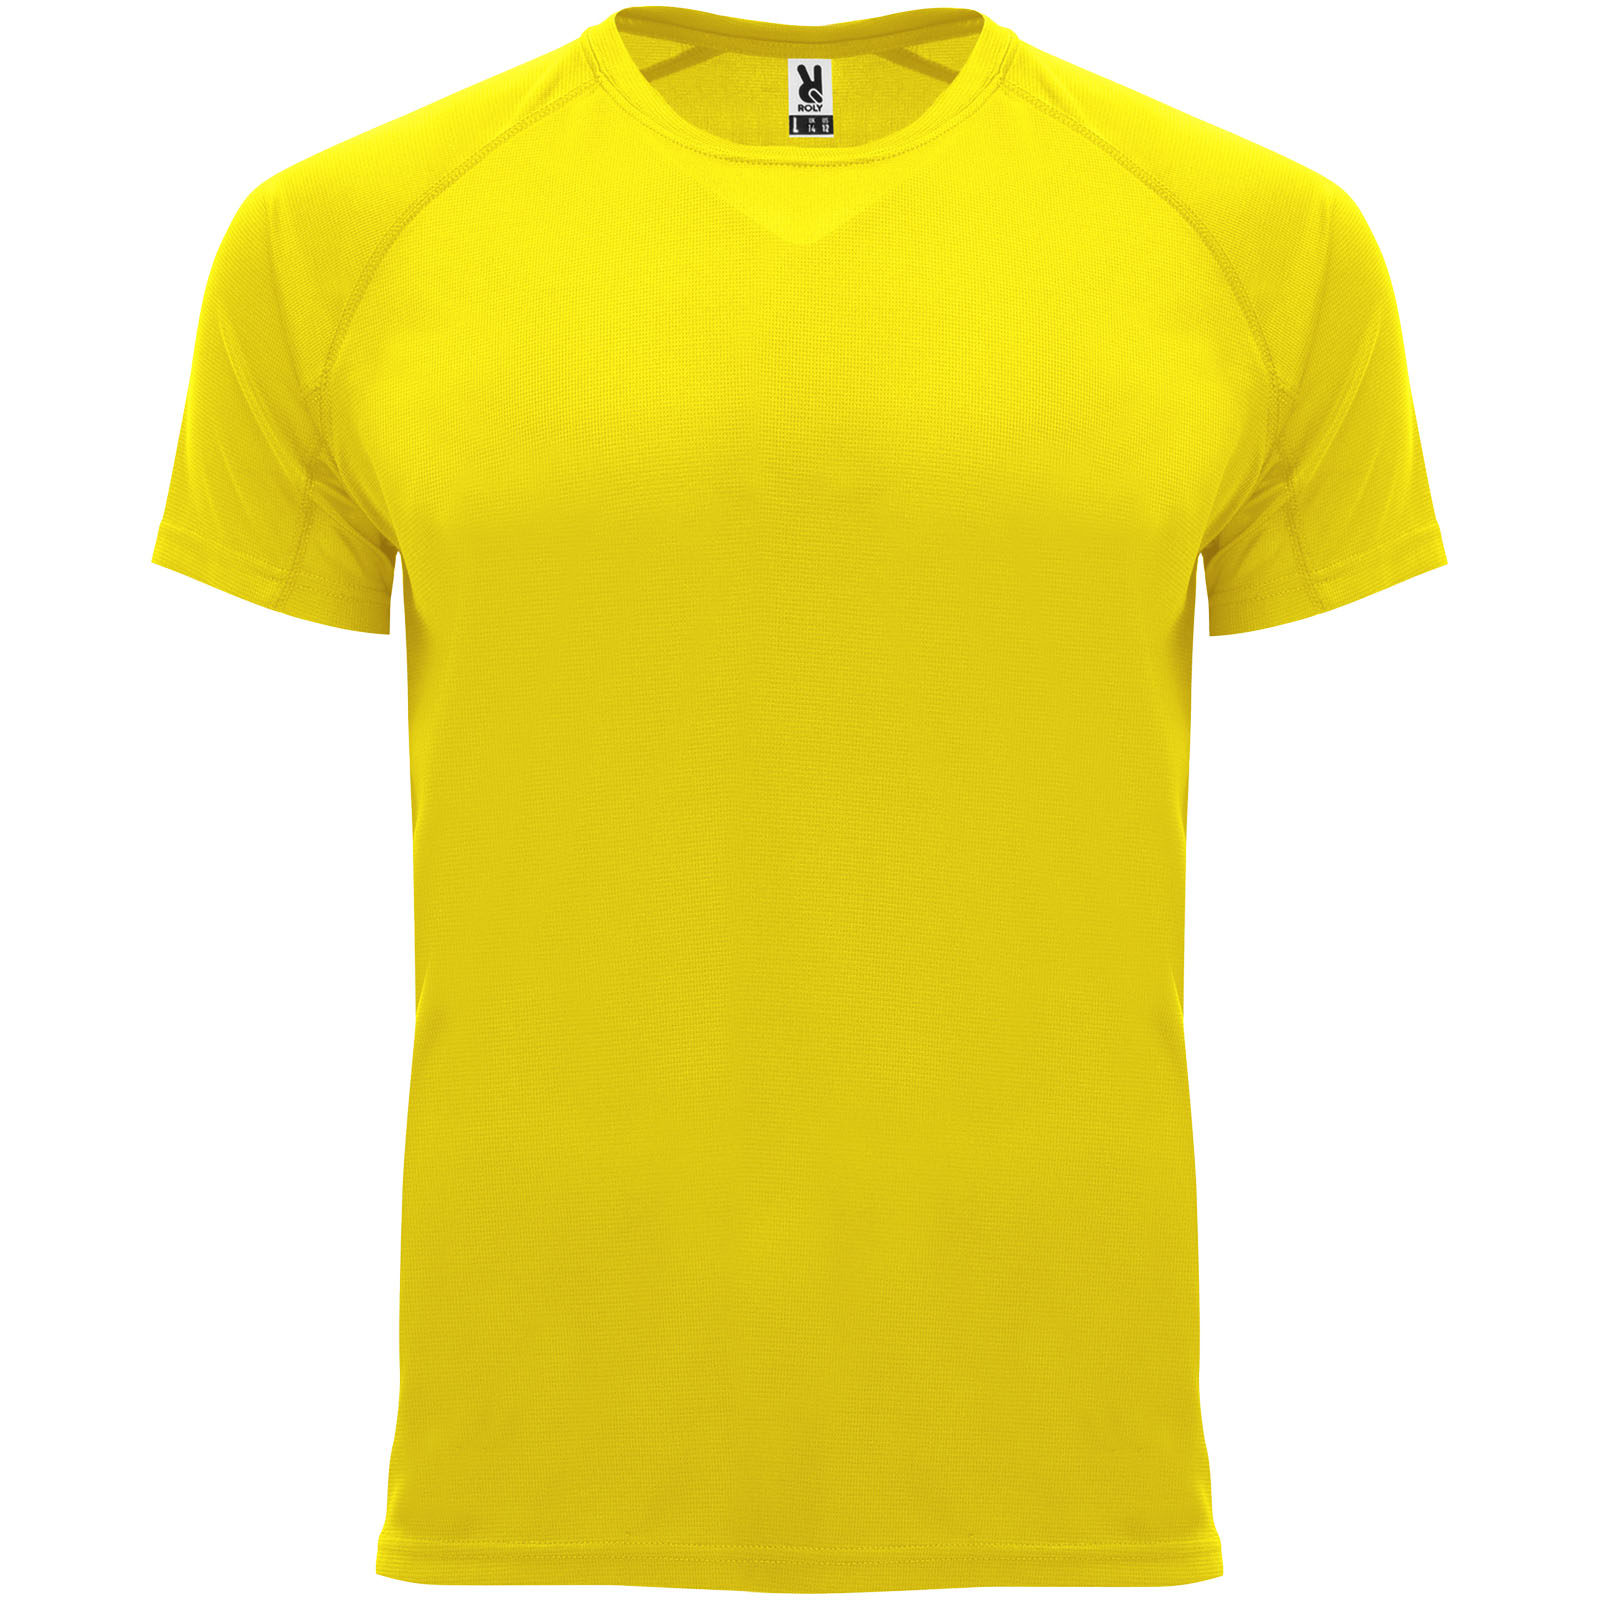 Advertising T-shirts - Bahrain short sleeve men's sports t-shirt - 0